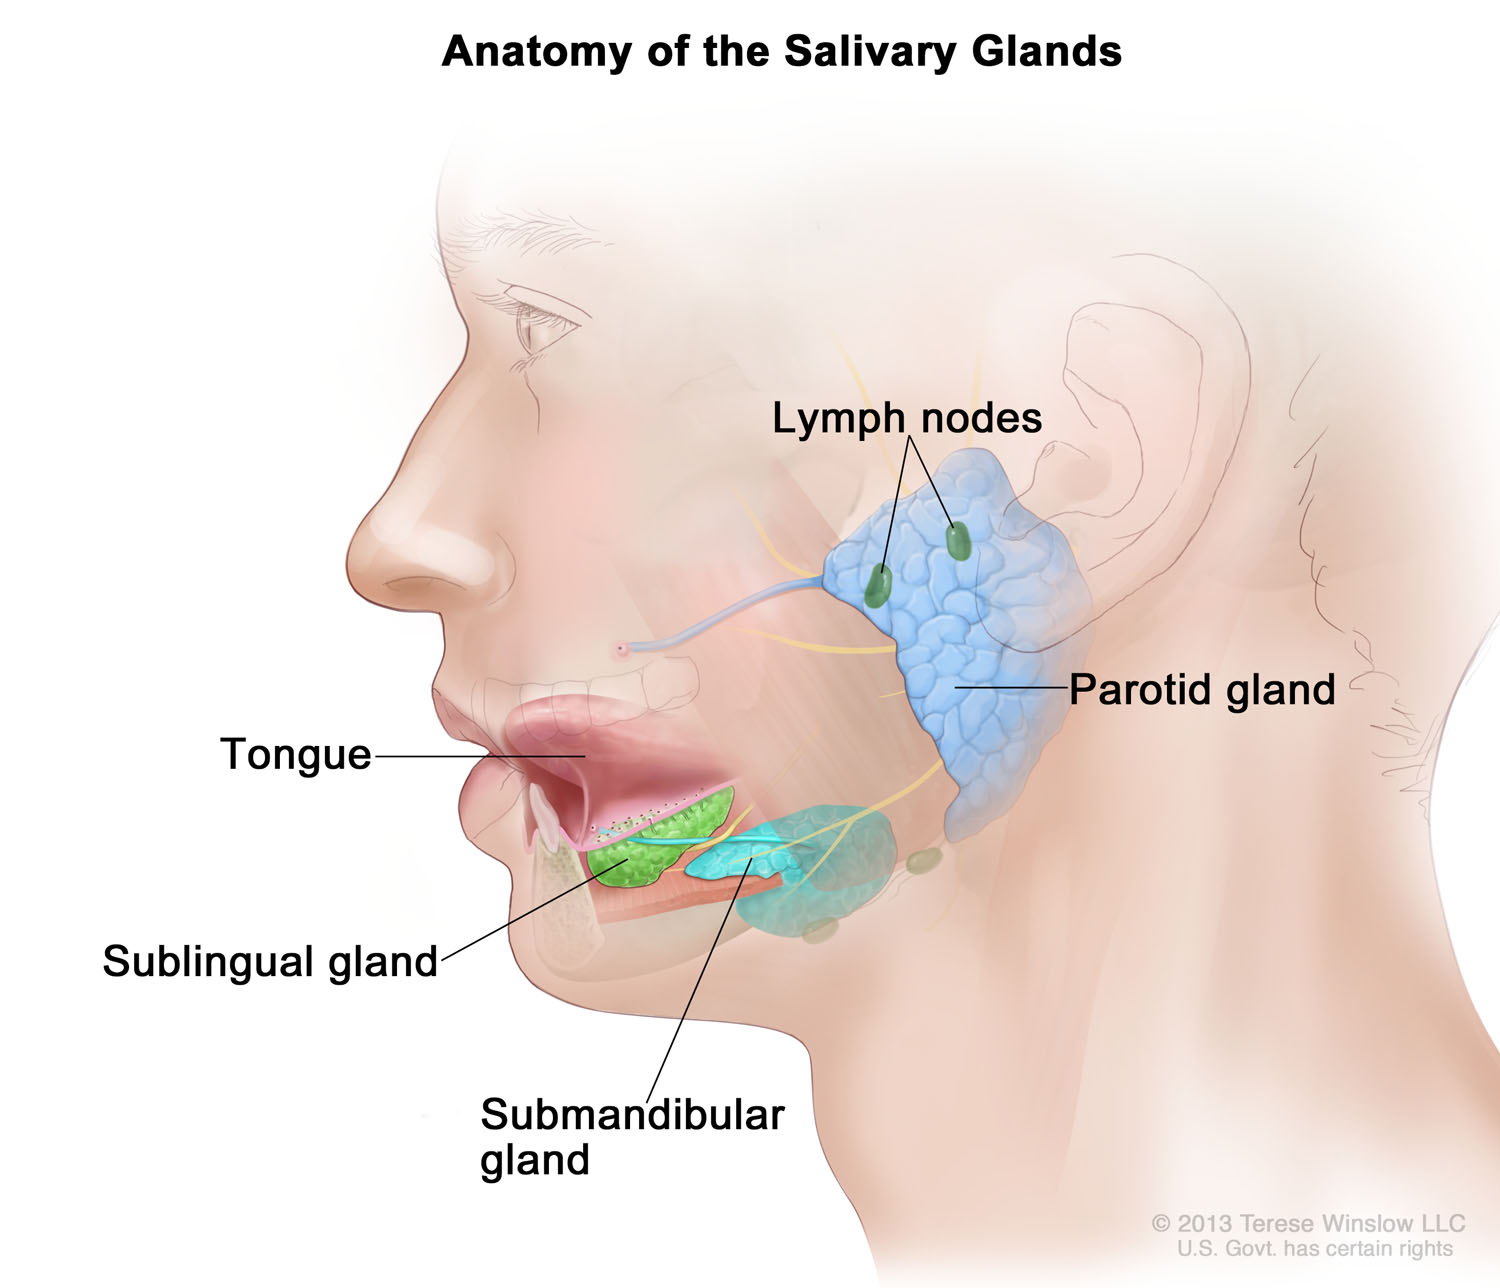 Anatomy of the Salivary Glands